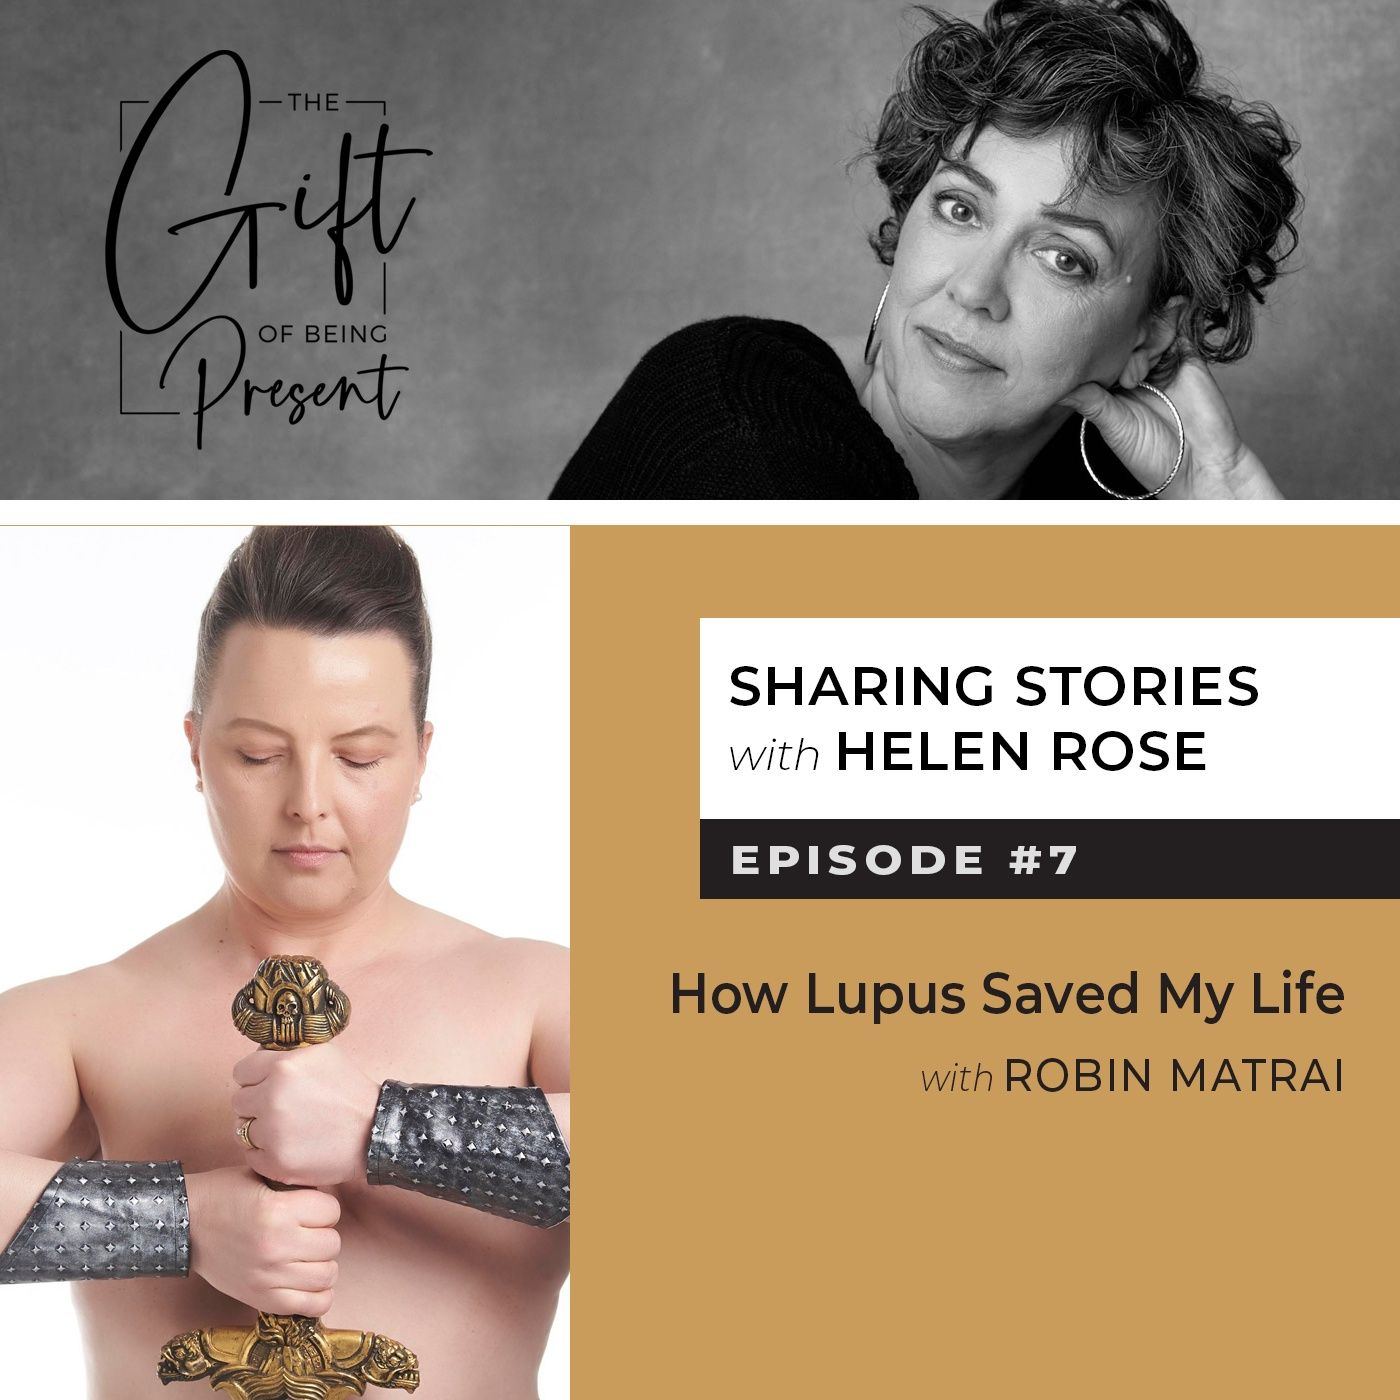 How Lupus Saved My Life with Robin Matrai